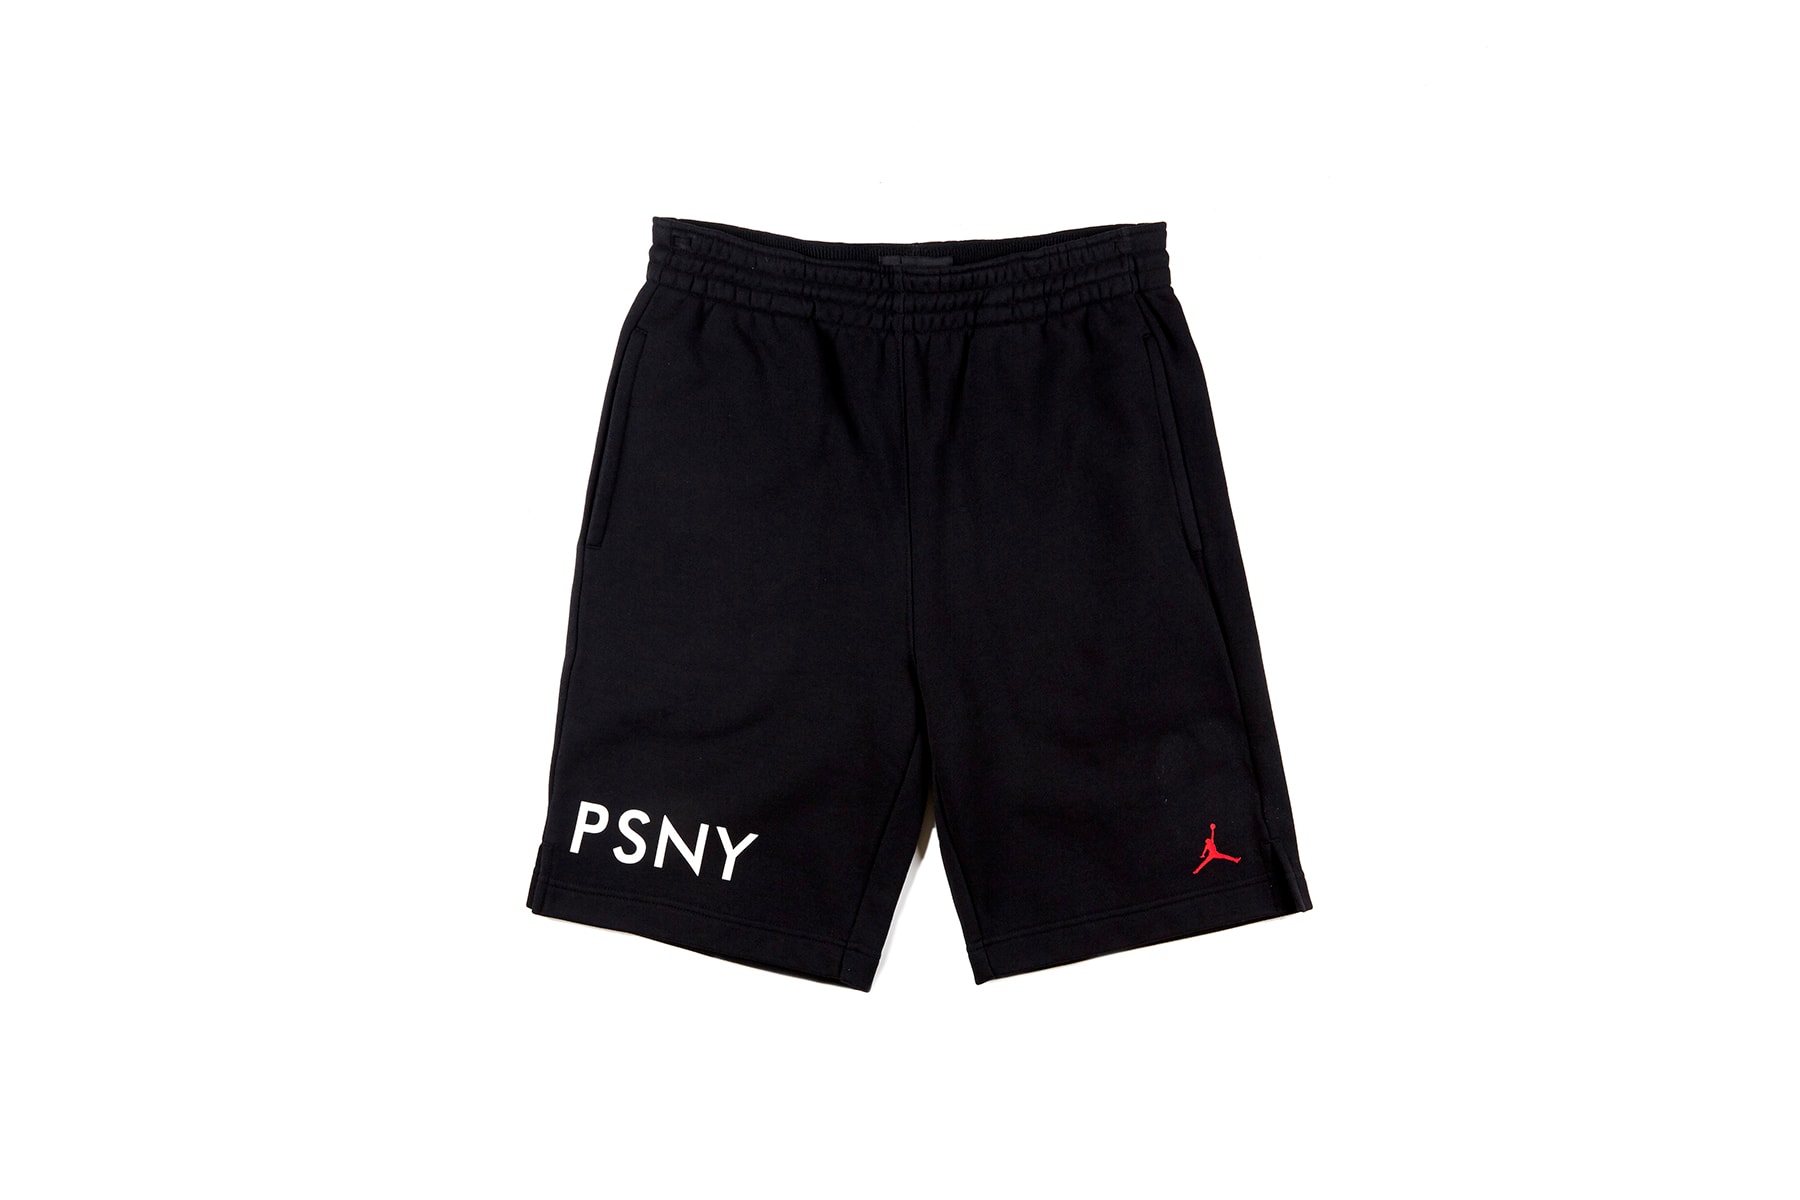 PSNY Public School New York Air Jordan Brand Collaborative Collection